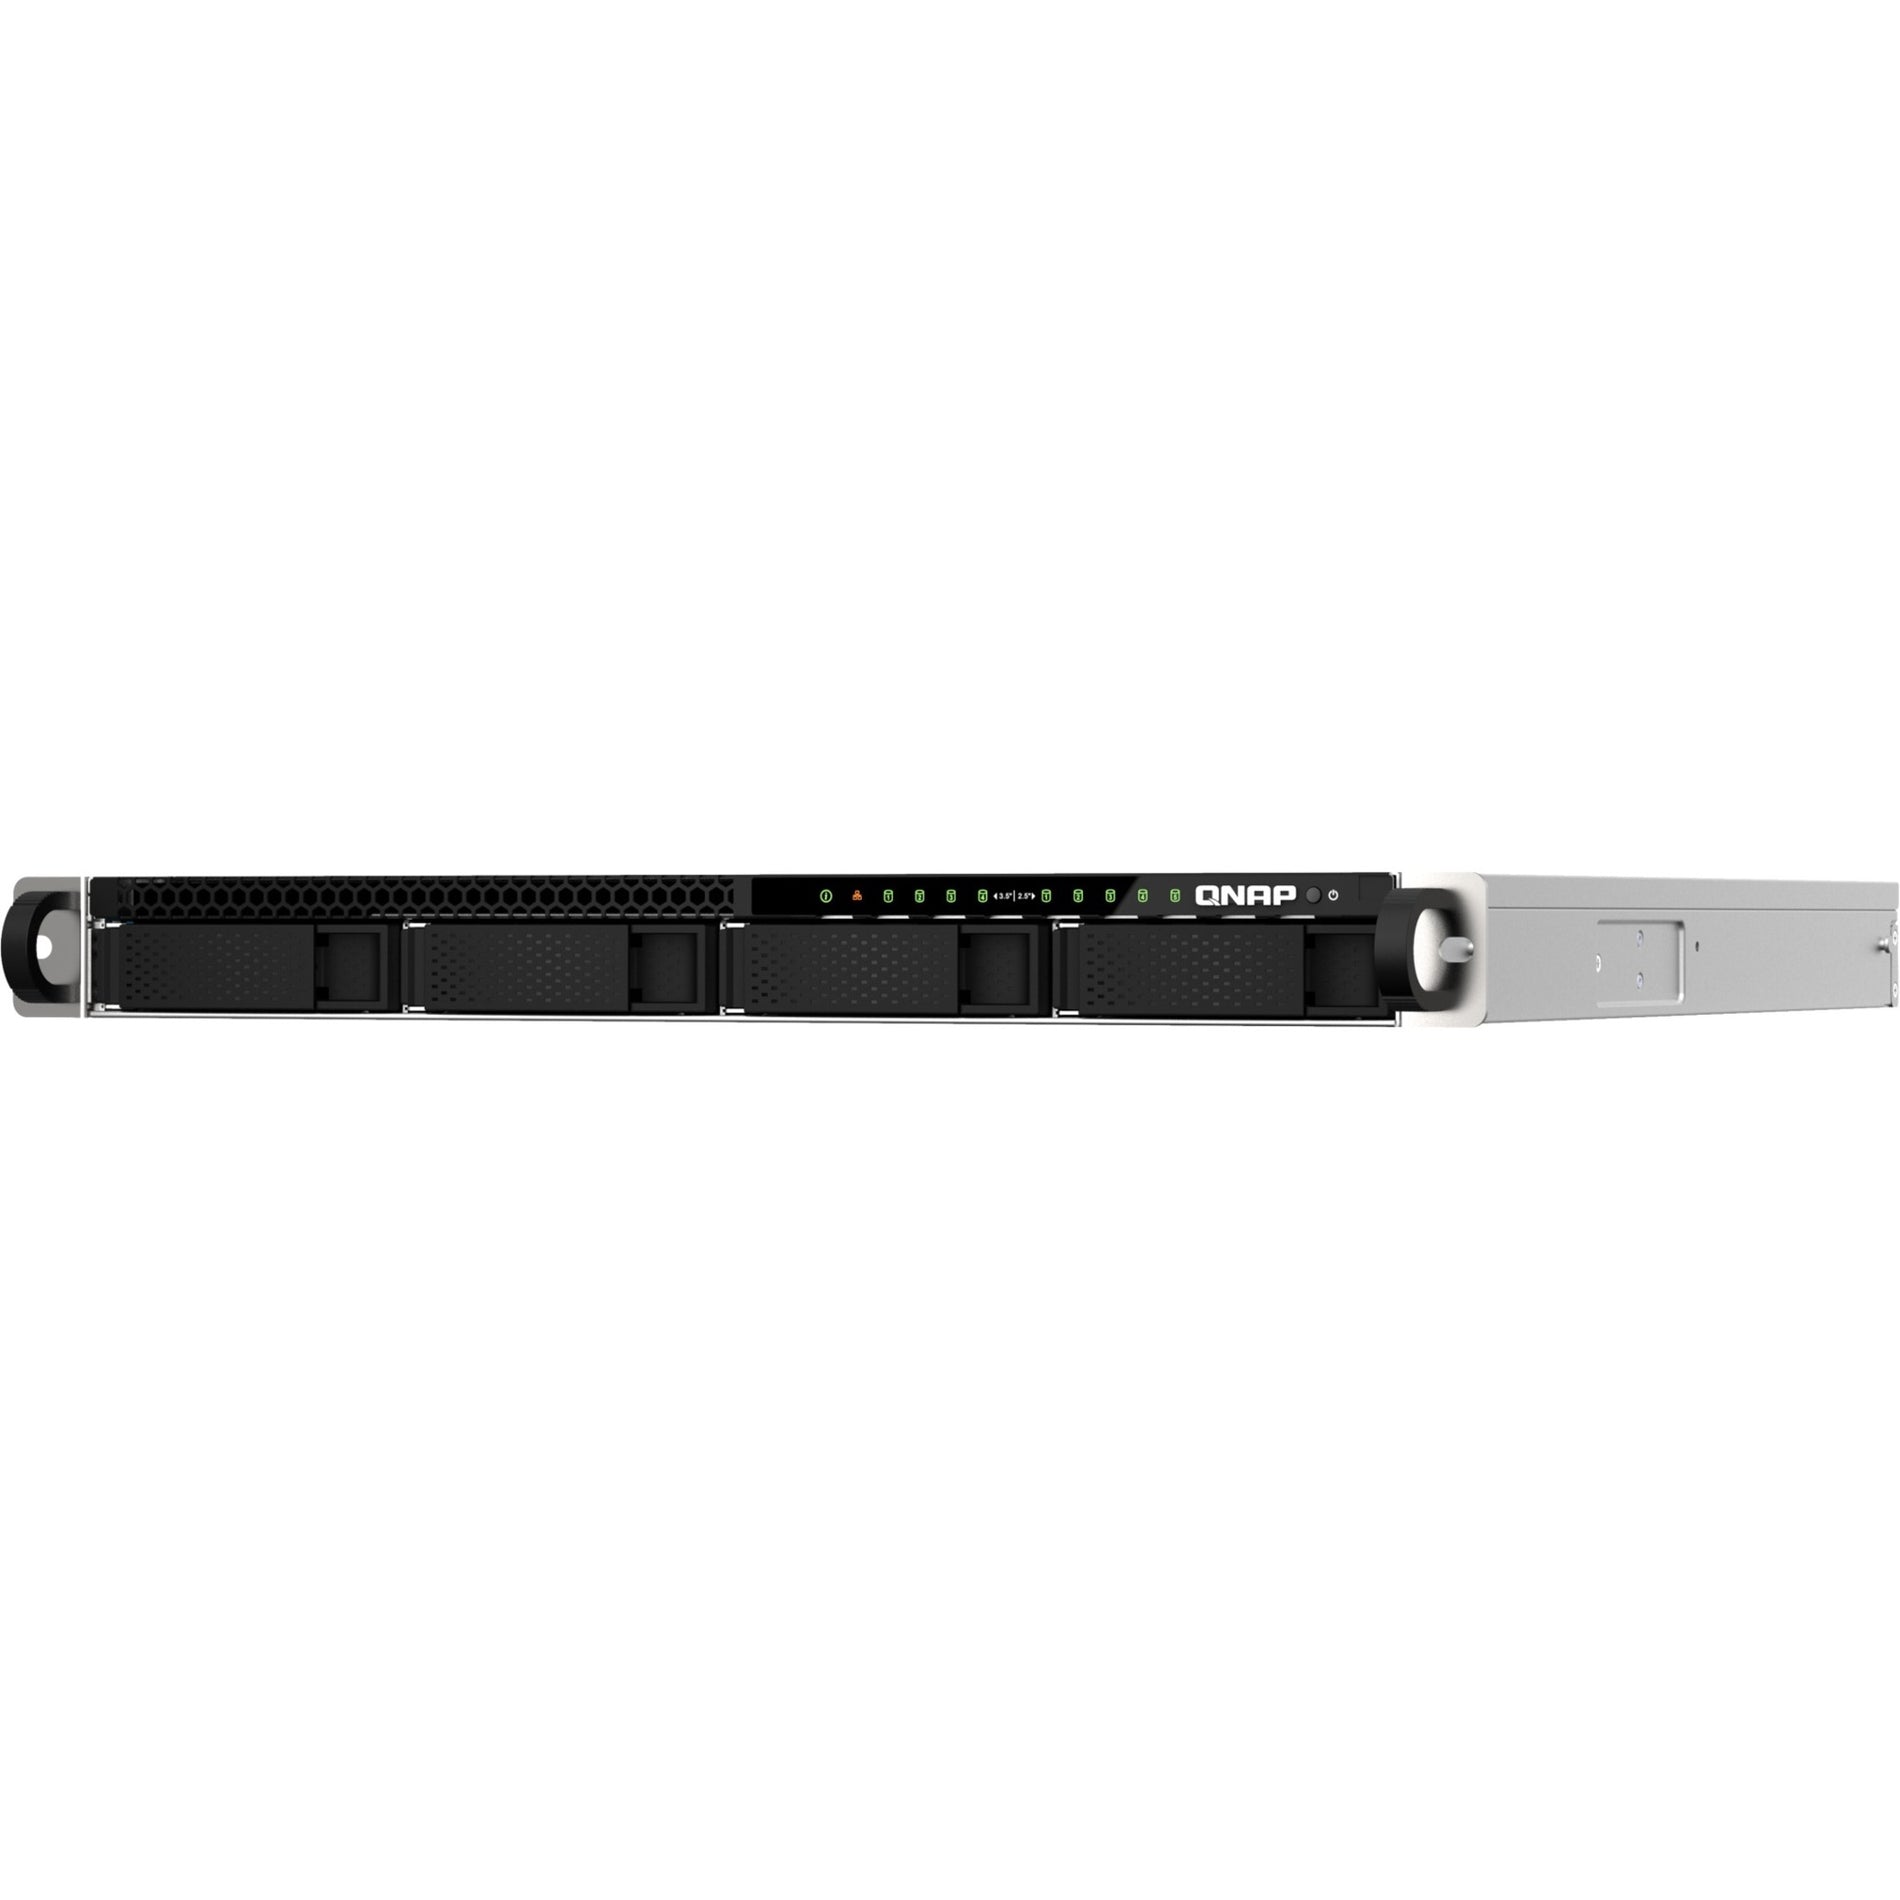 QNAP TS-H987XU-RP-E2334-16G SAN/NAS Storage System TS-H987XU-RP-E2334-16G-US, 16GB DDR4, 9 Bays, 10GbE, 1U Rack-mountable